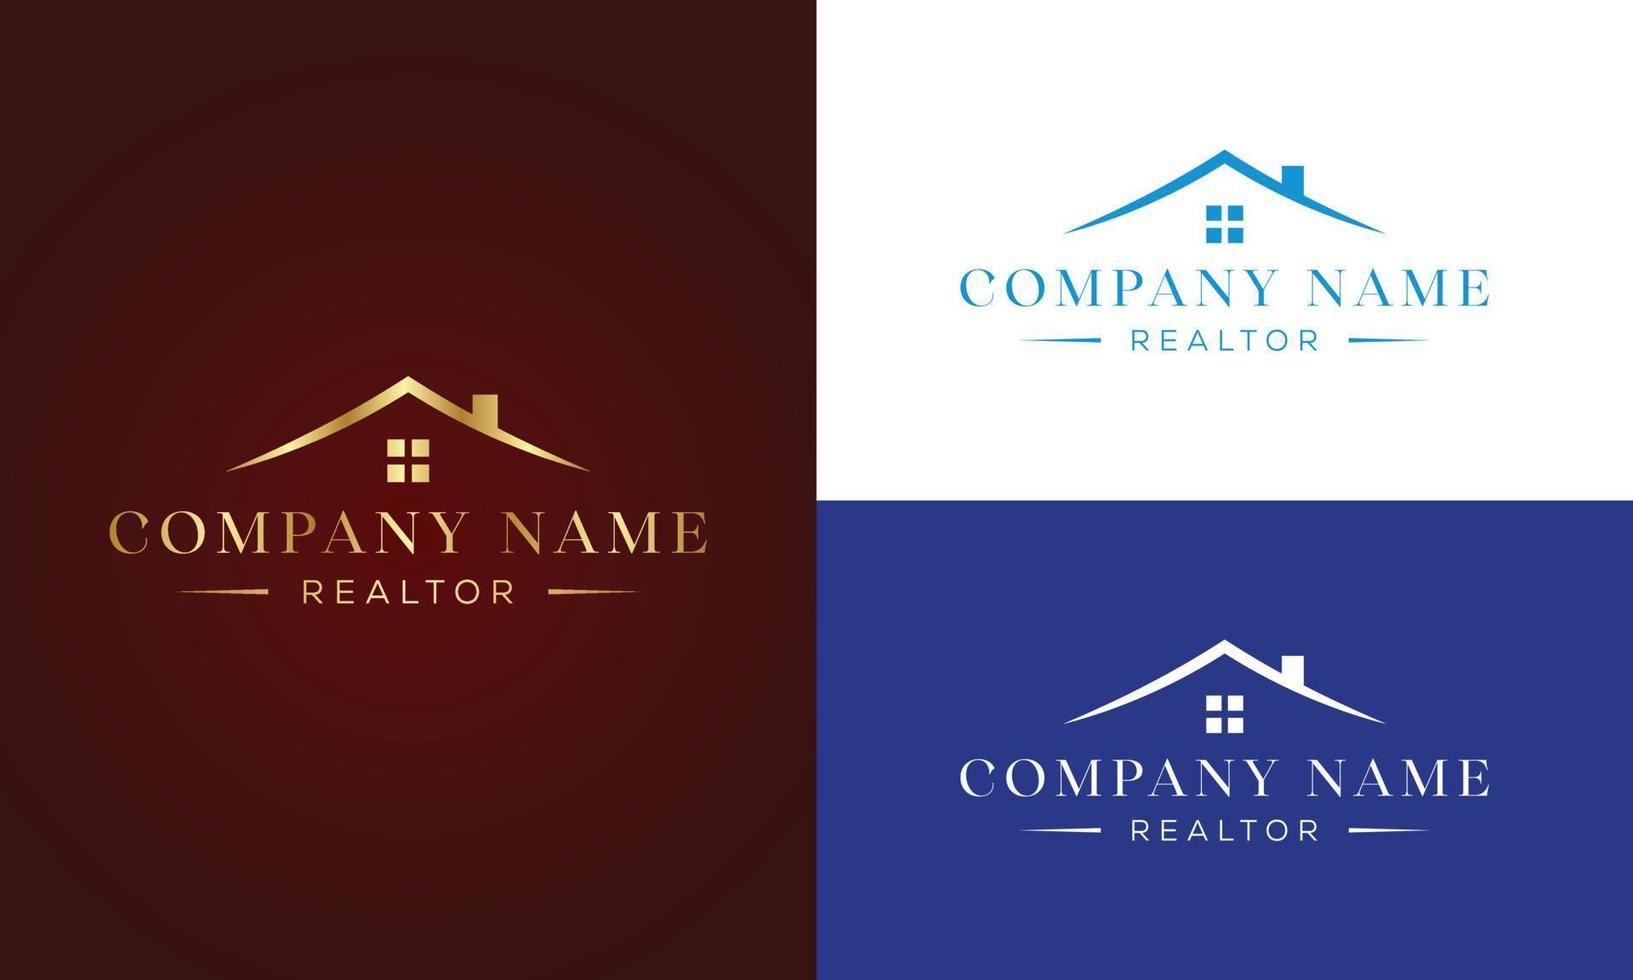 Building and Construction real estate logo design vector